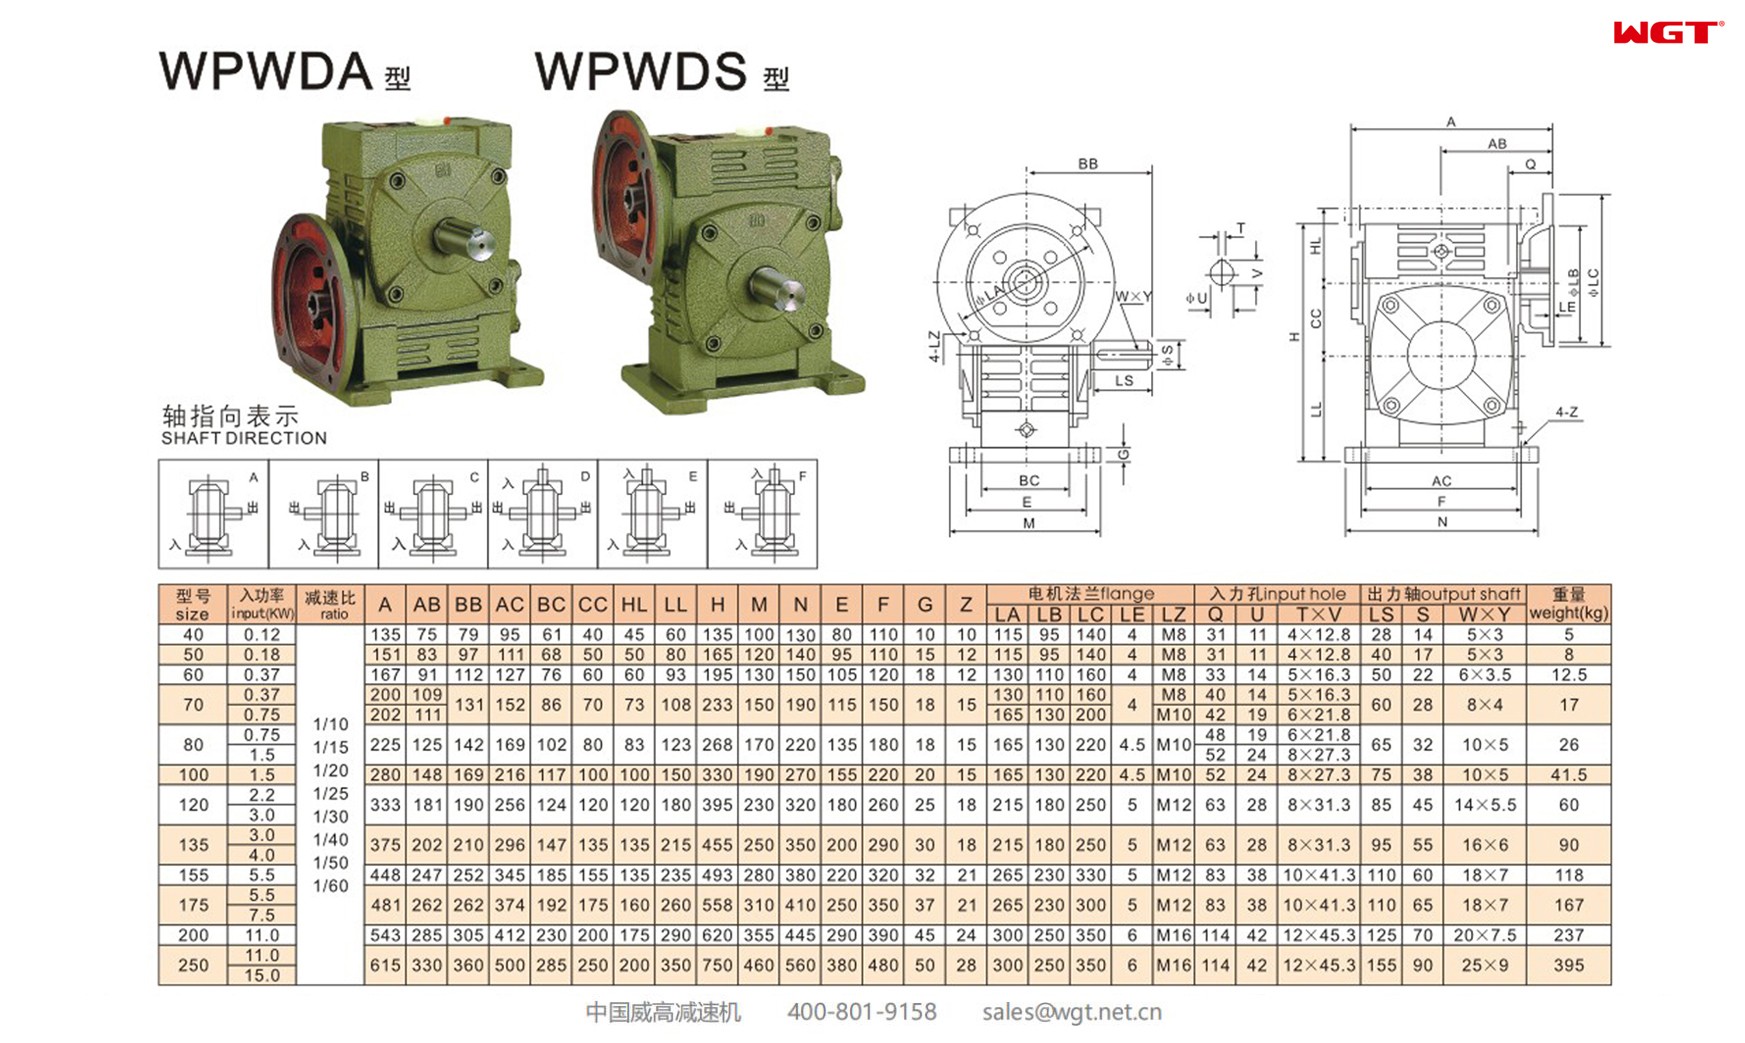 WPWDS200 worm gear reducer universal speed reducer